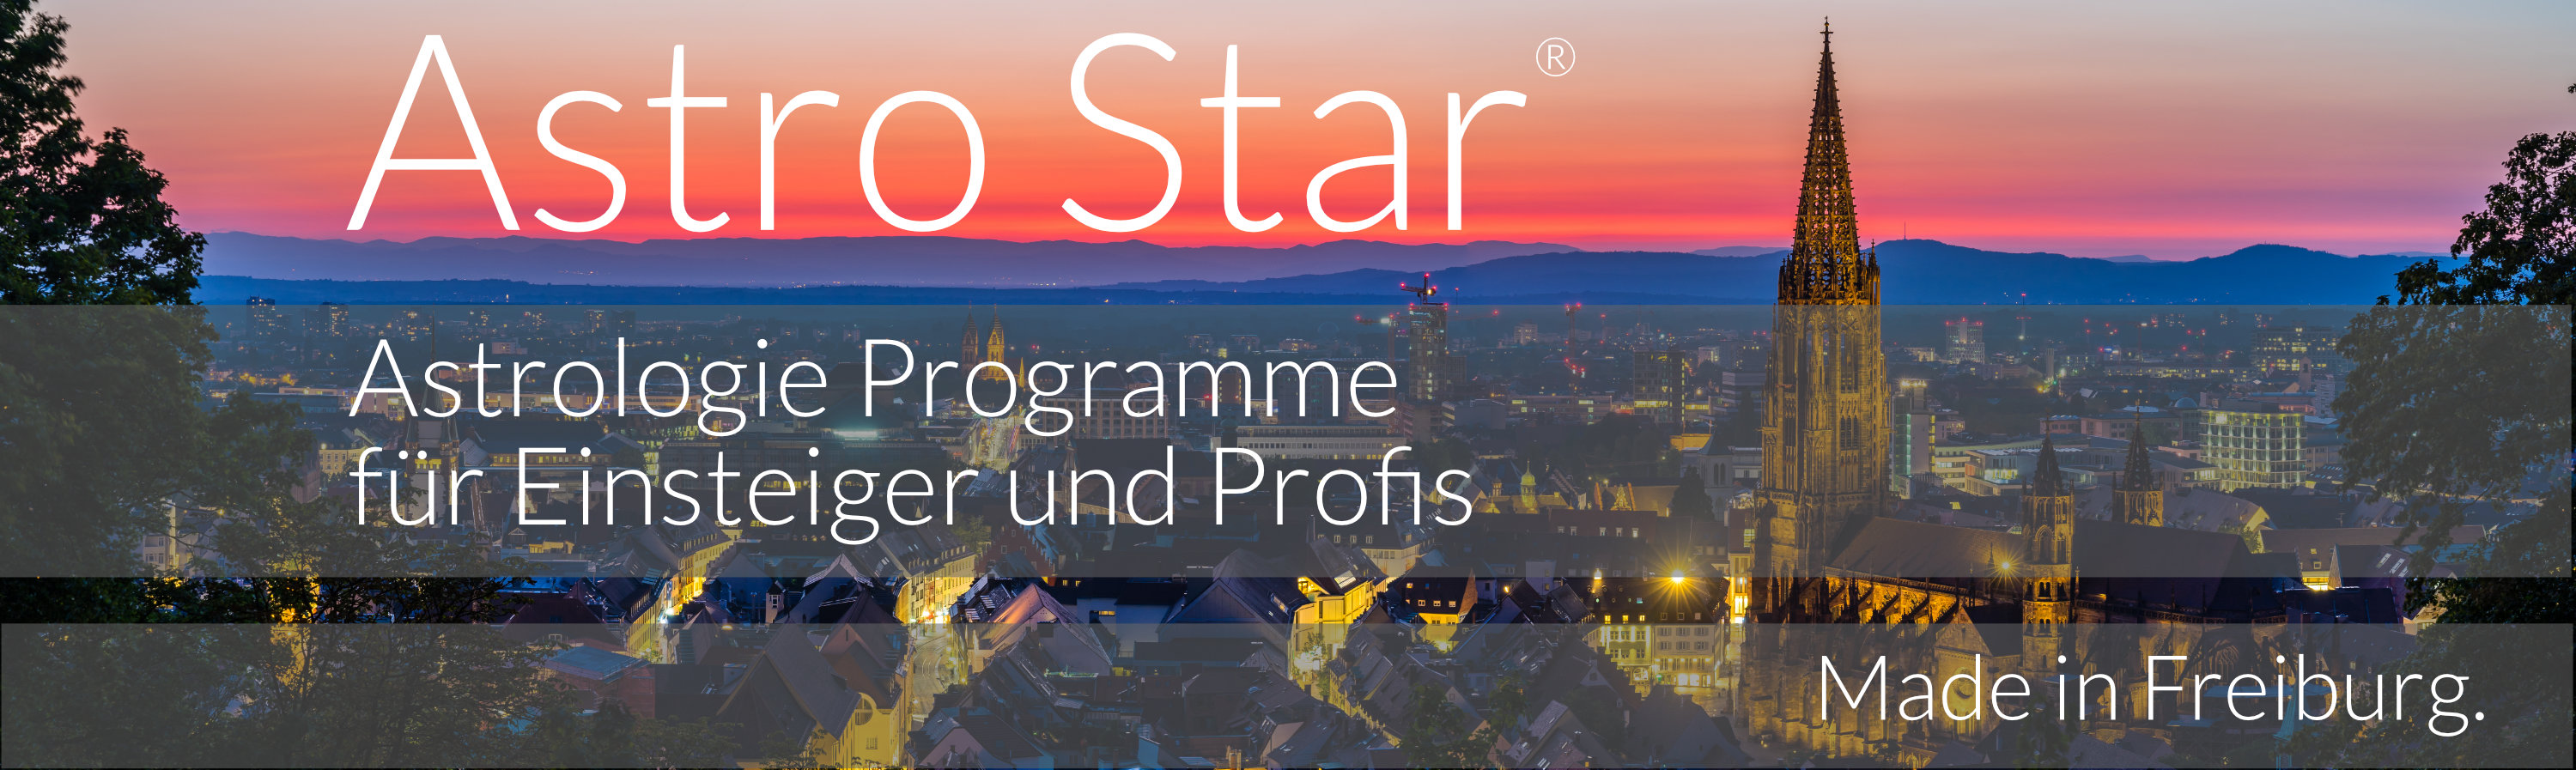 Astro Star - Astrologie Programme Made in Freiburg.